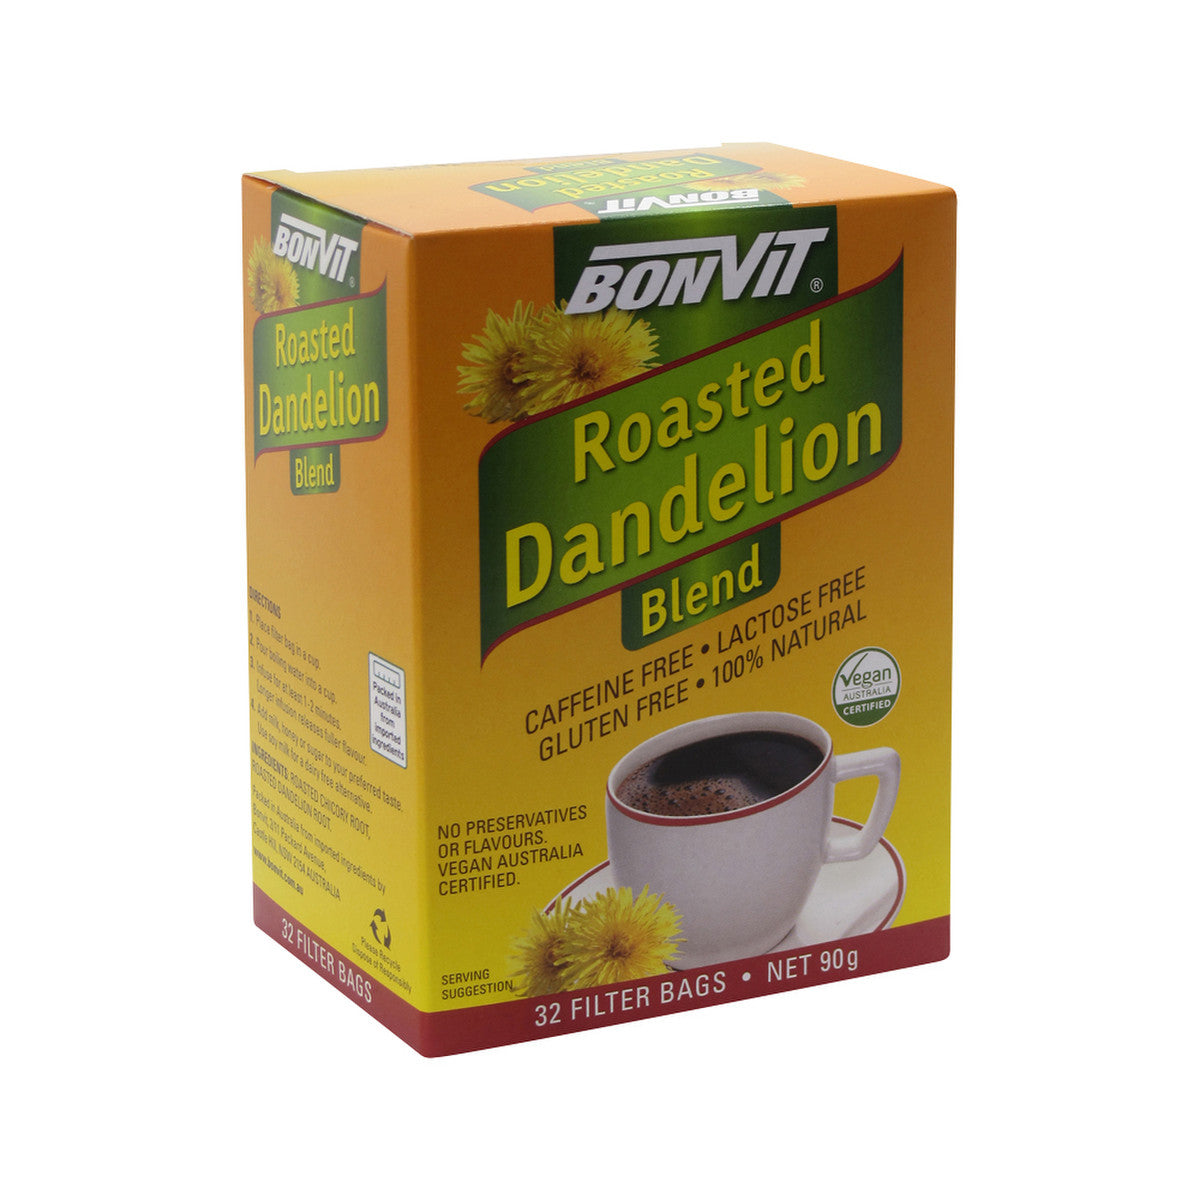 Bonvit - Roasted Dandelion Blend Tea